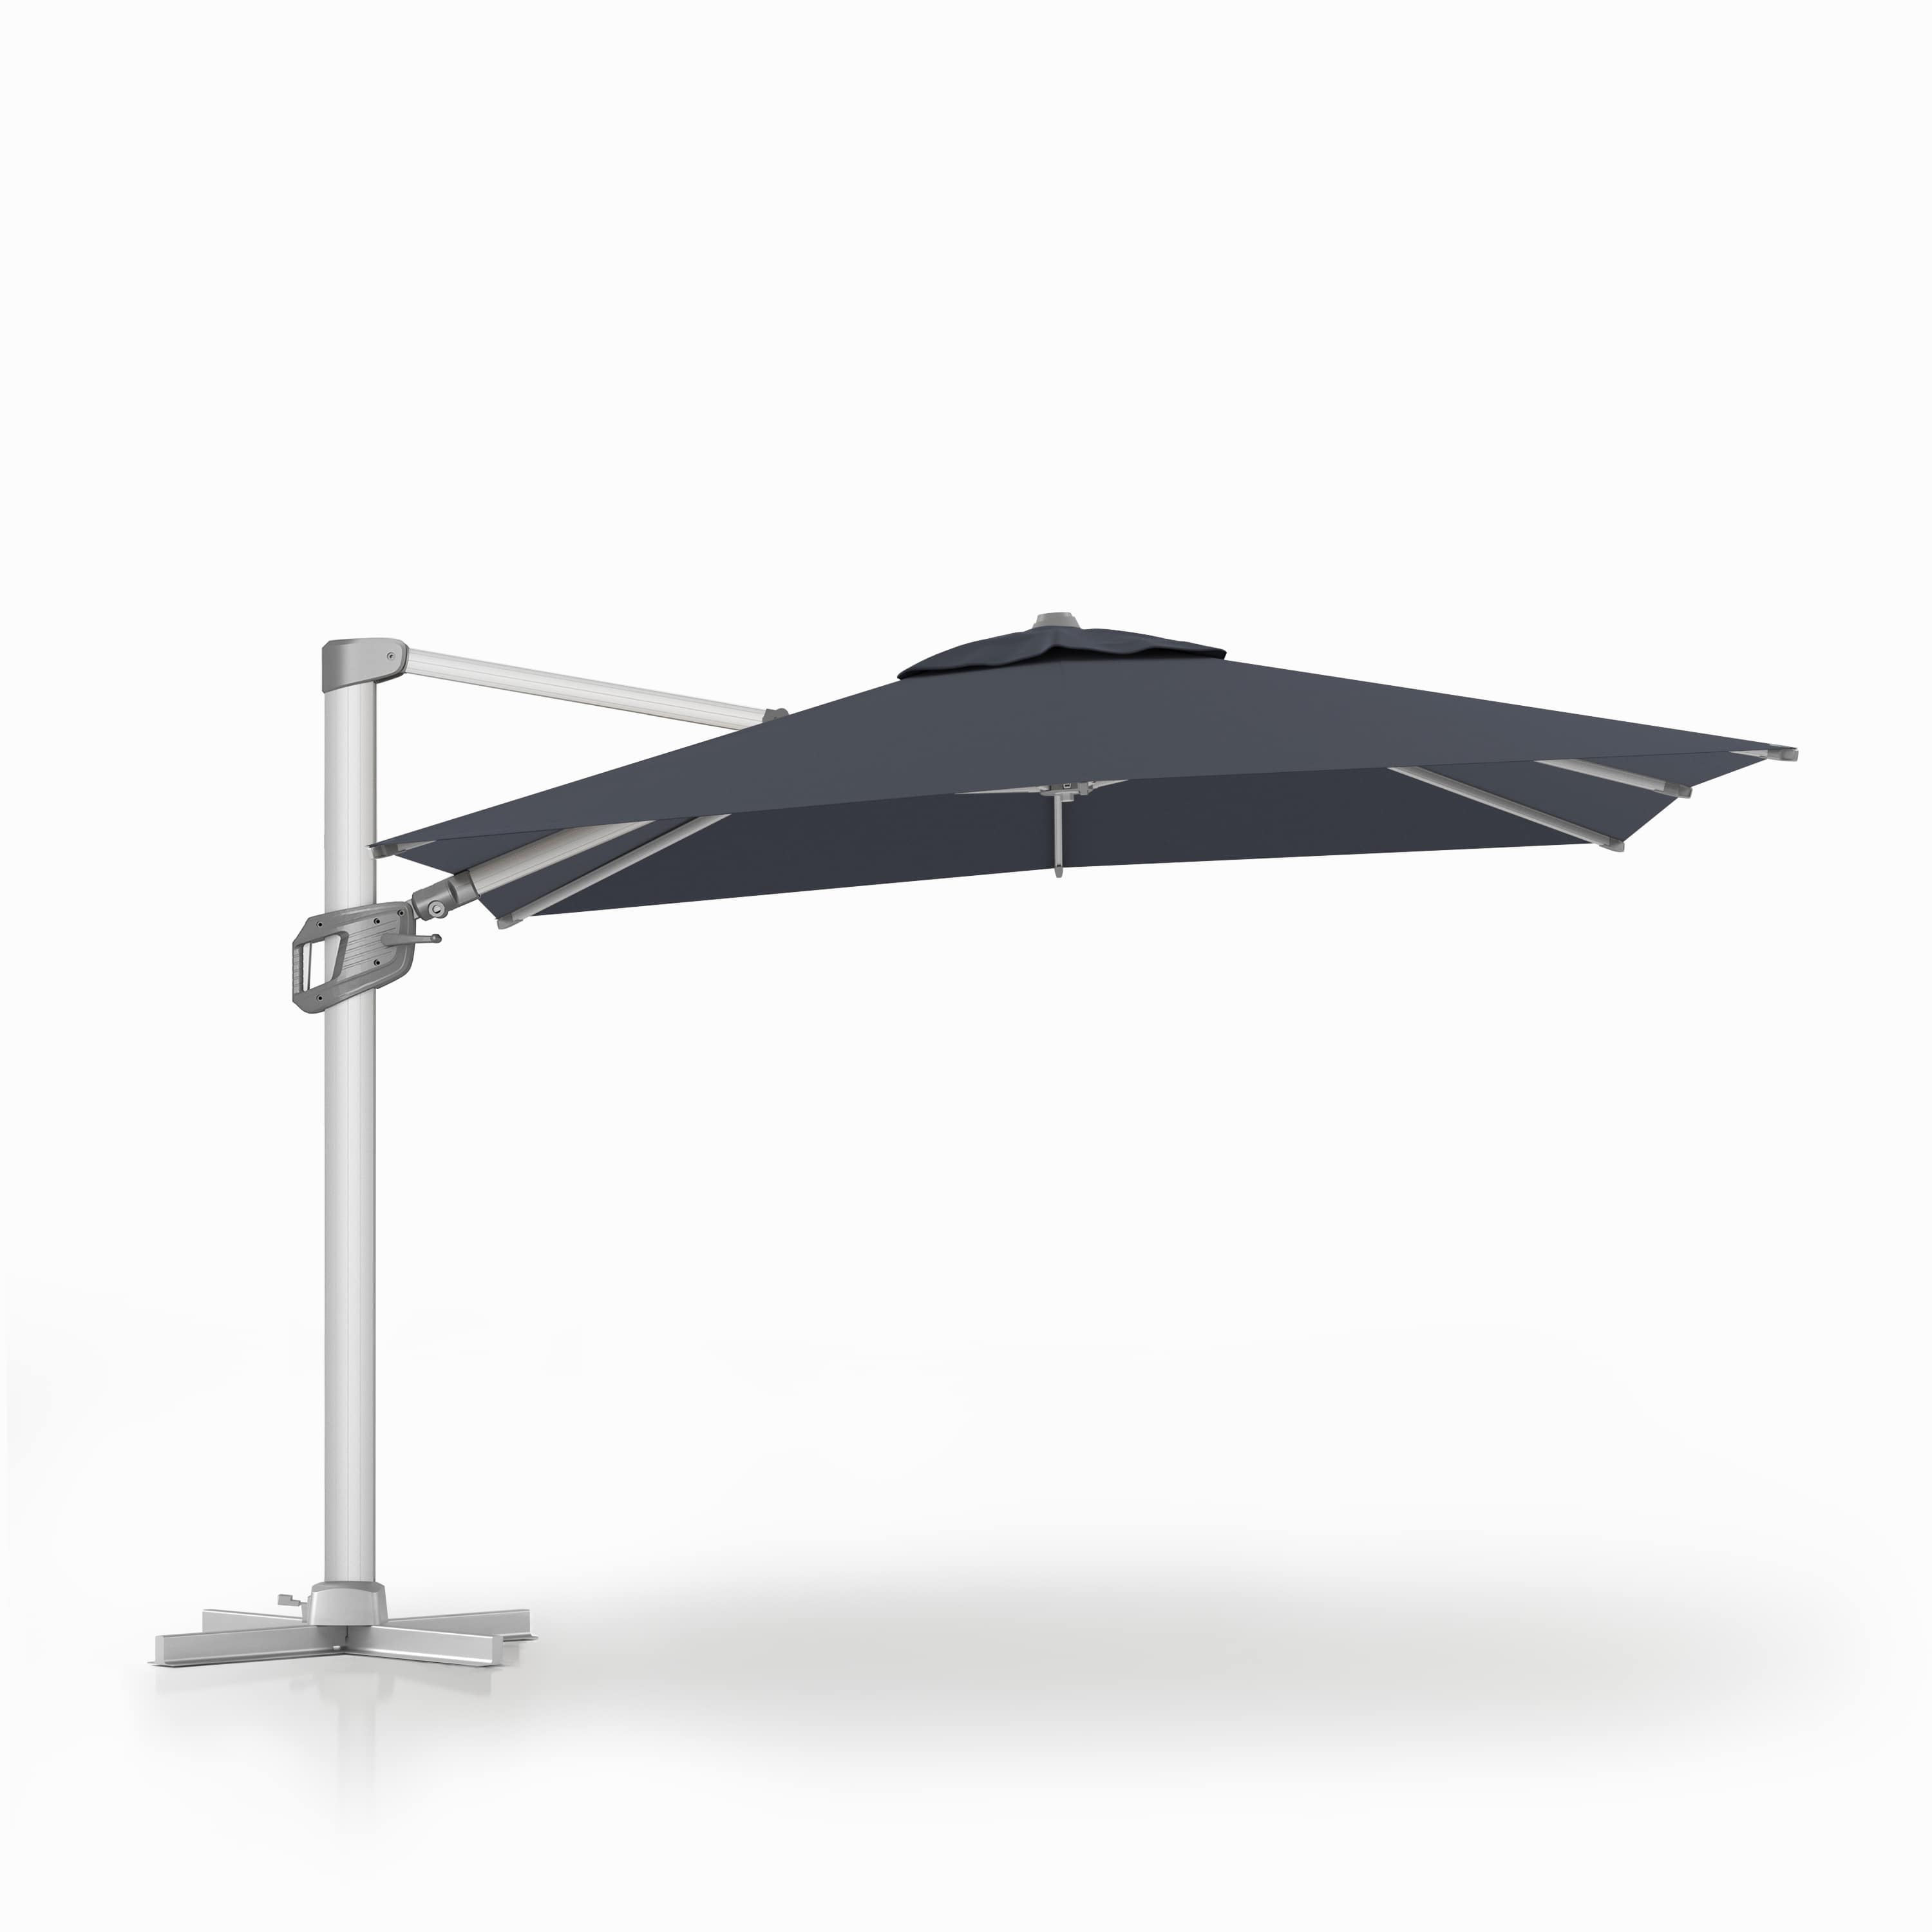 Bluu Redwood Pro Cantilever Umbrella Rectangular 1-Tier